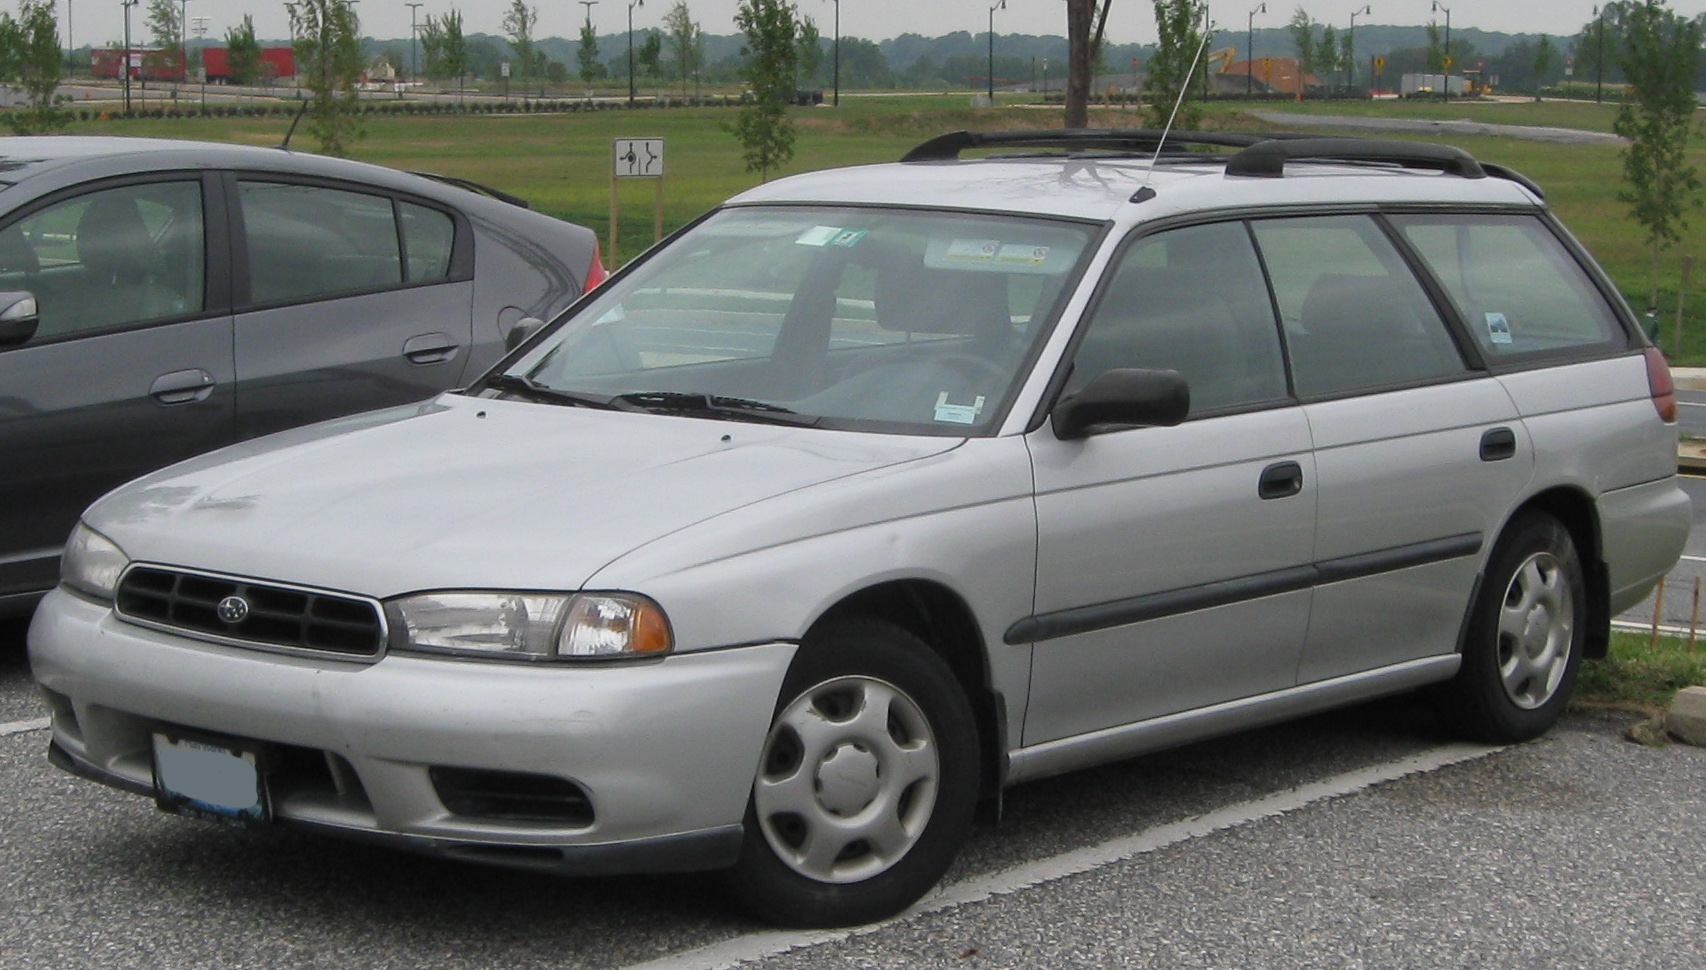 Subaru Legacy (second generation) - Wikipedia